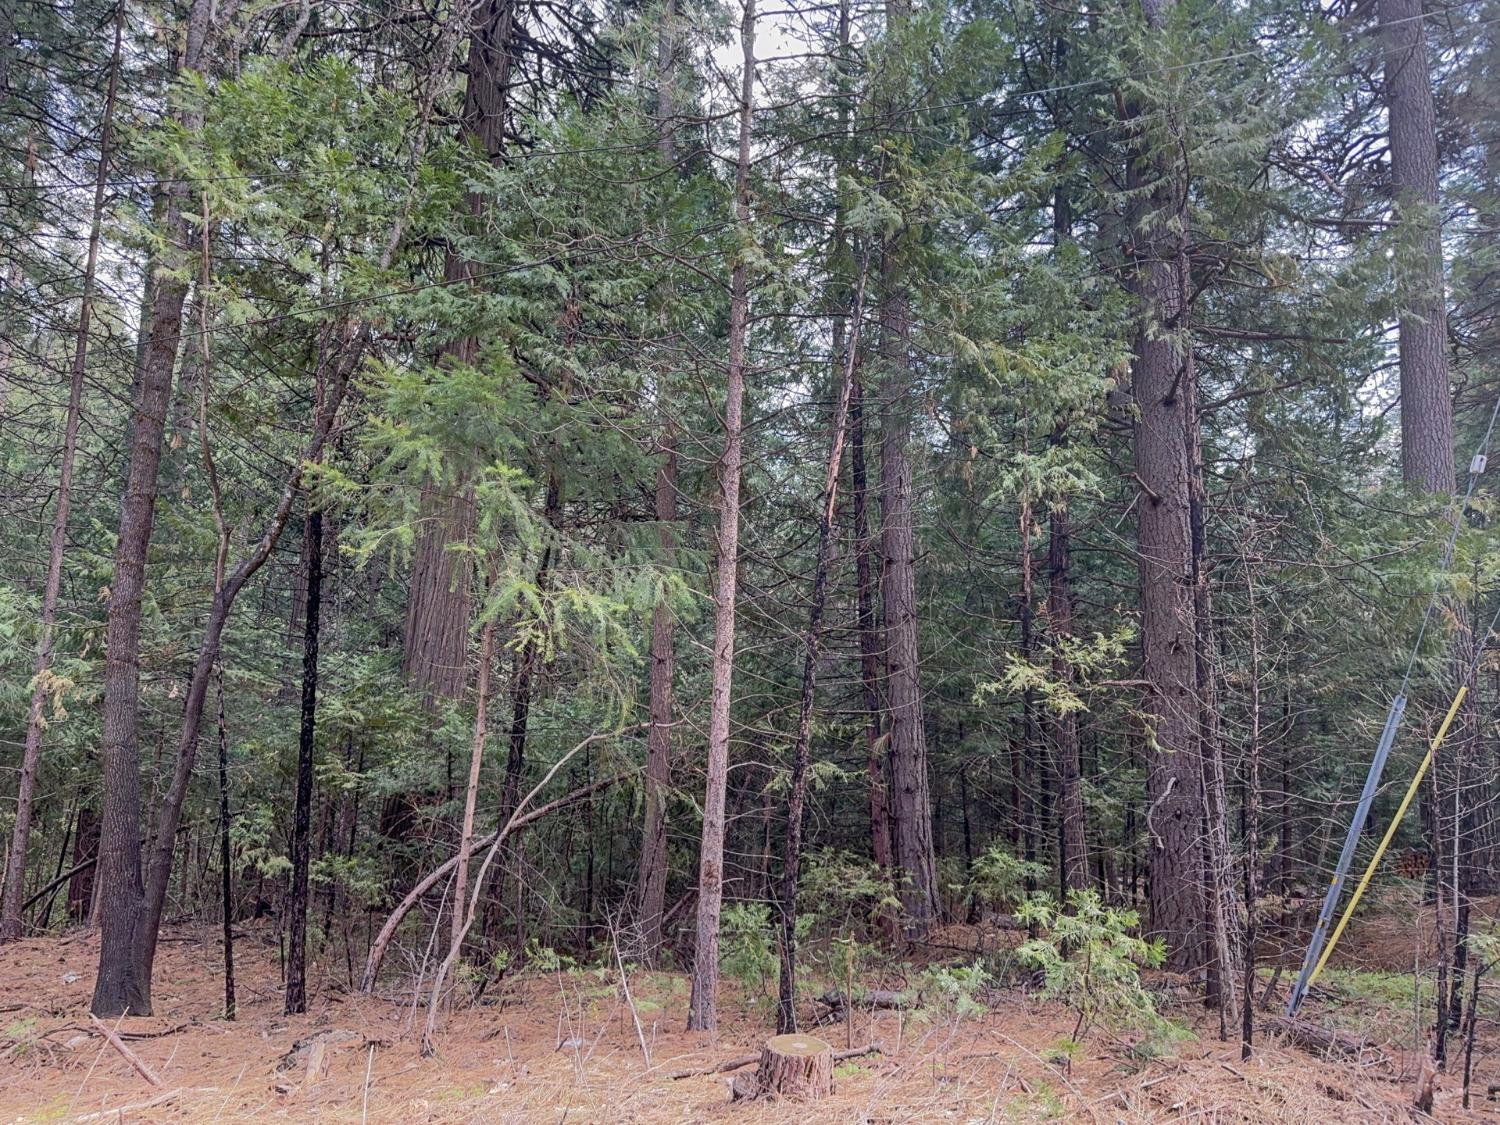 Photo of 6134 Kokanee Ln in Pollock Pines, CA